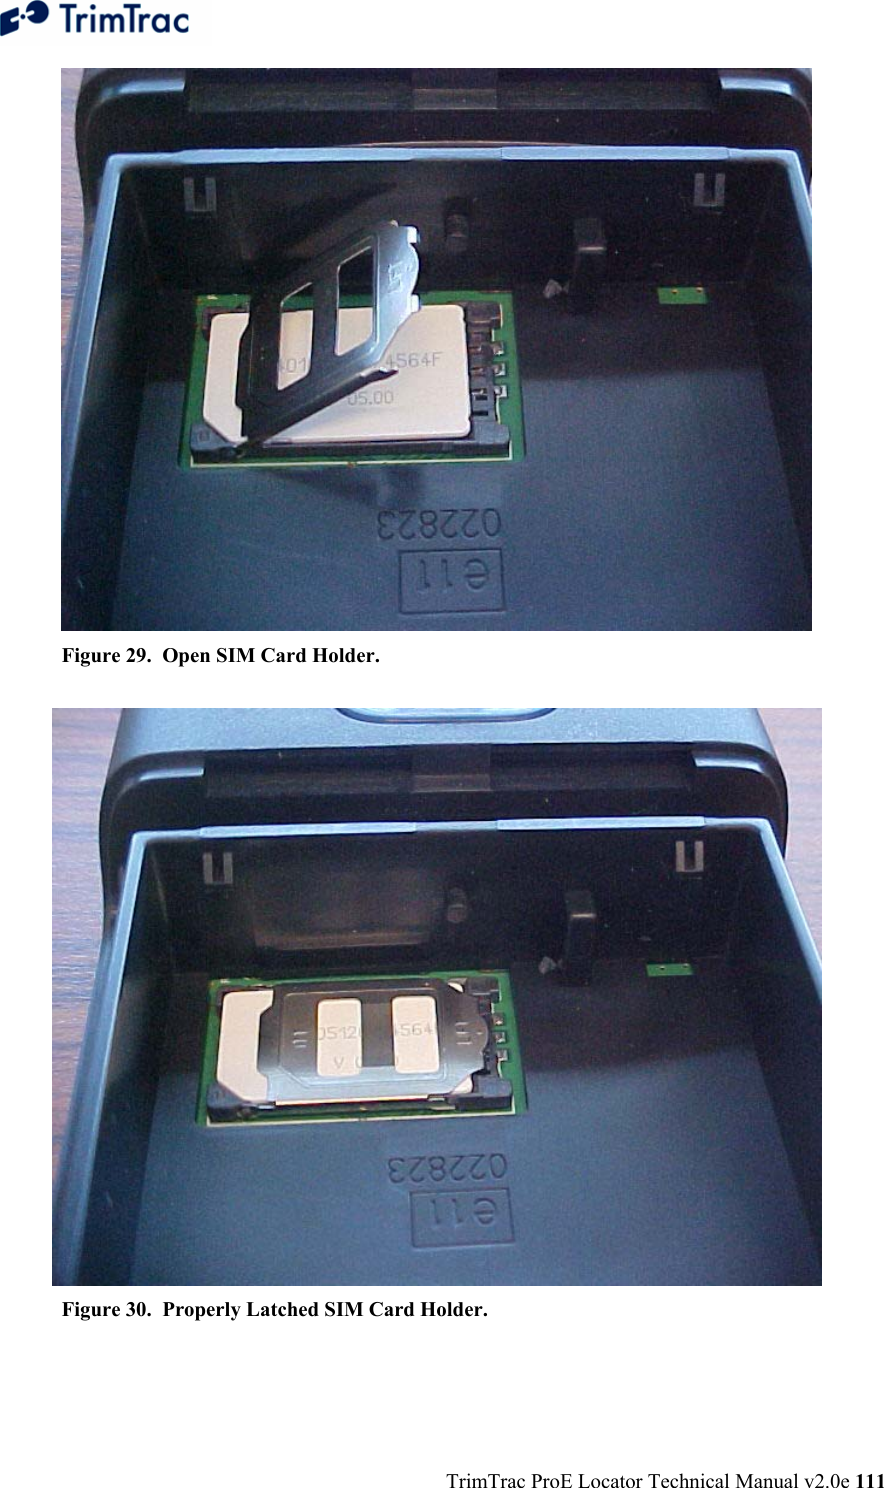  TrimTrac ProE Locator Technical Manual v2.0e 111  Figure 29.  Open SIM Card Holder.   Figure 30.  Properly Latched SIM Card Holder.  